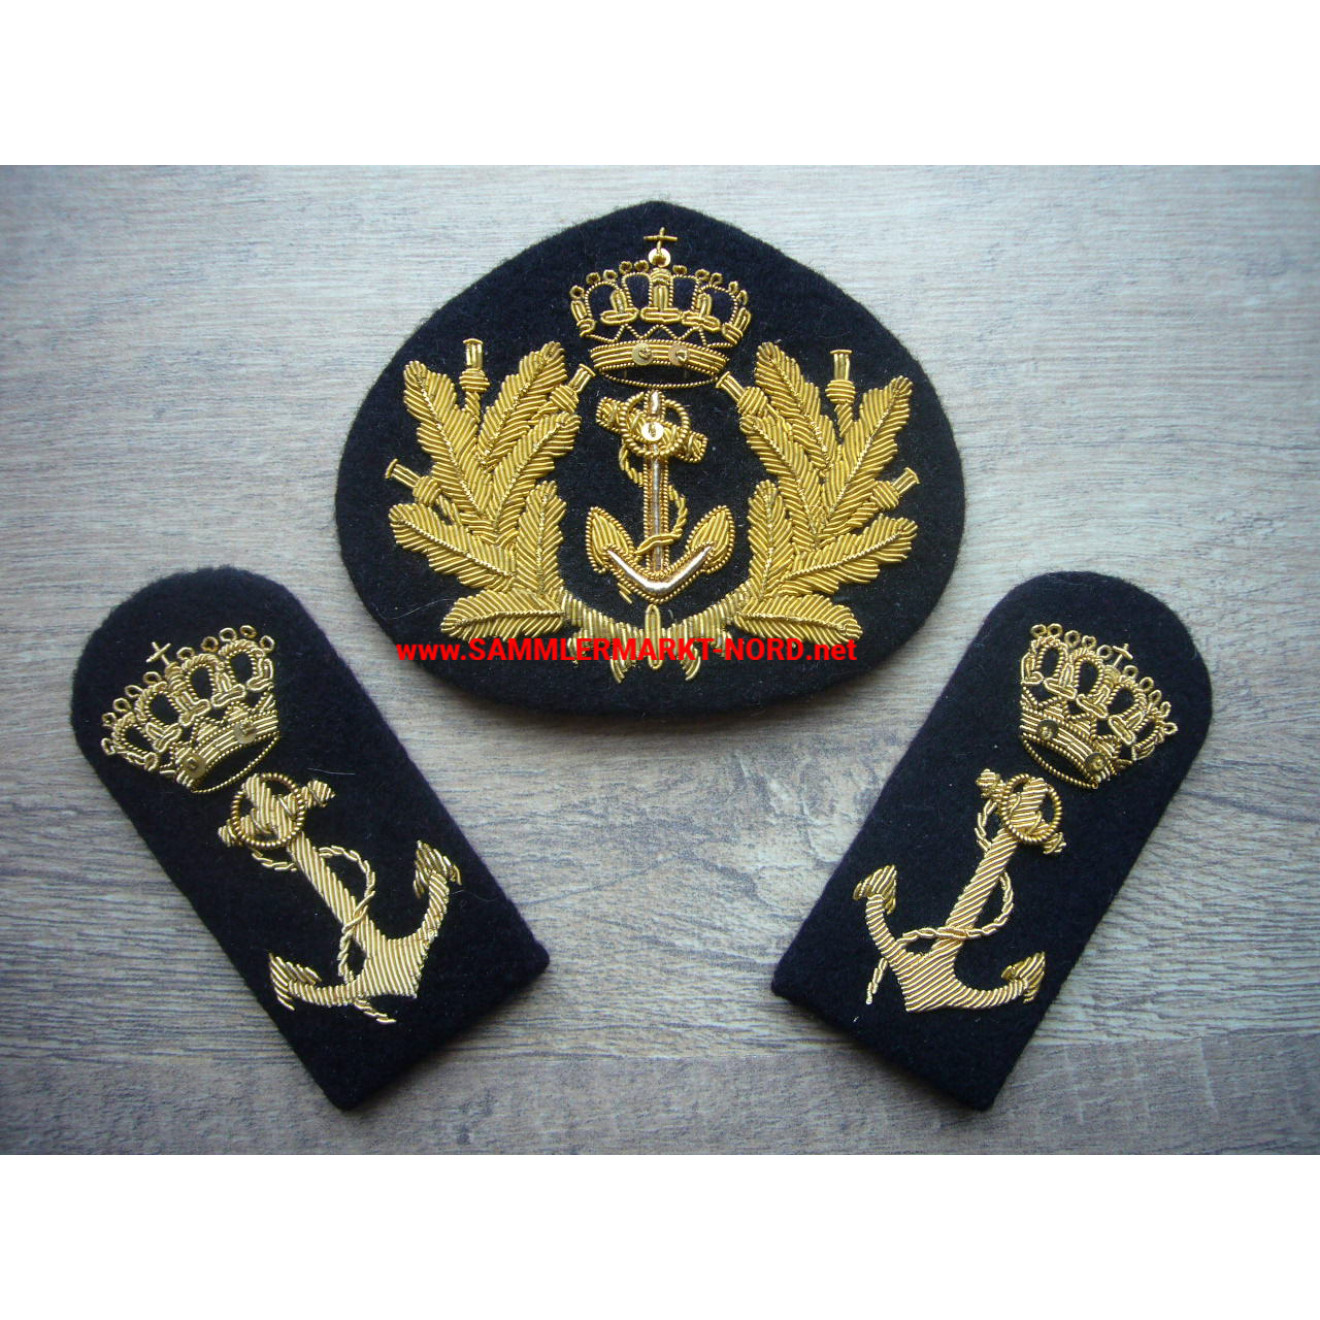 Netherlands - Uniform parts of a Dutch naval officer